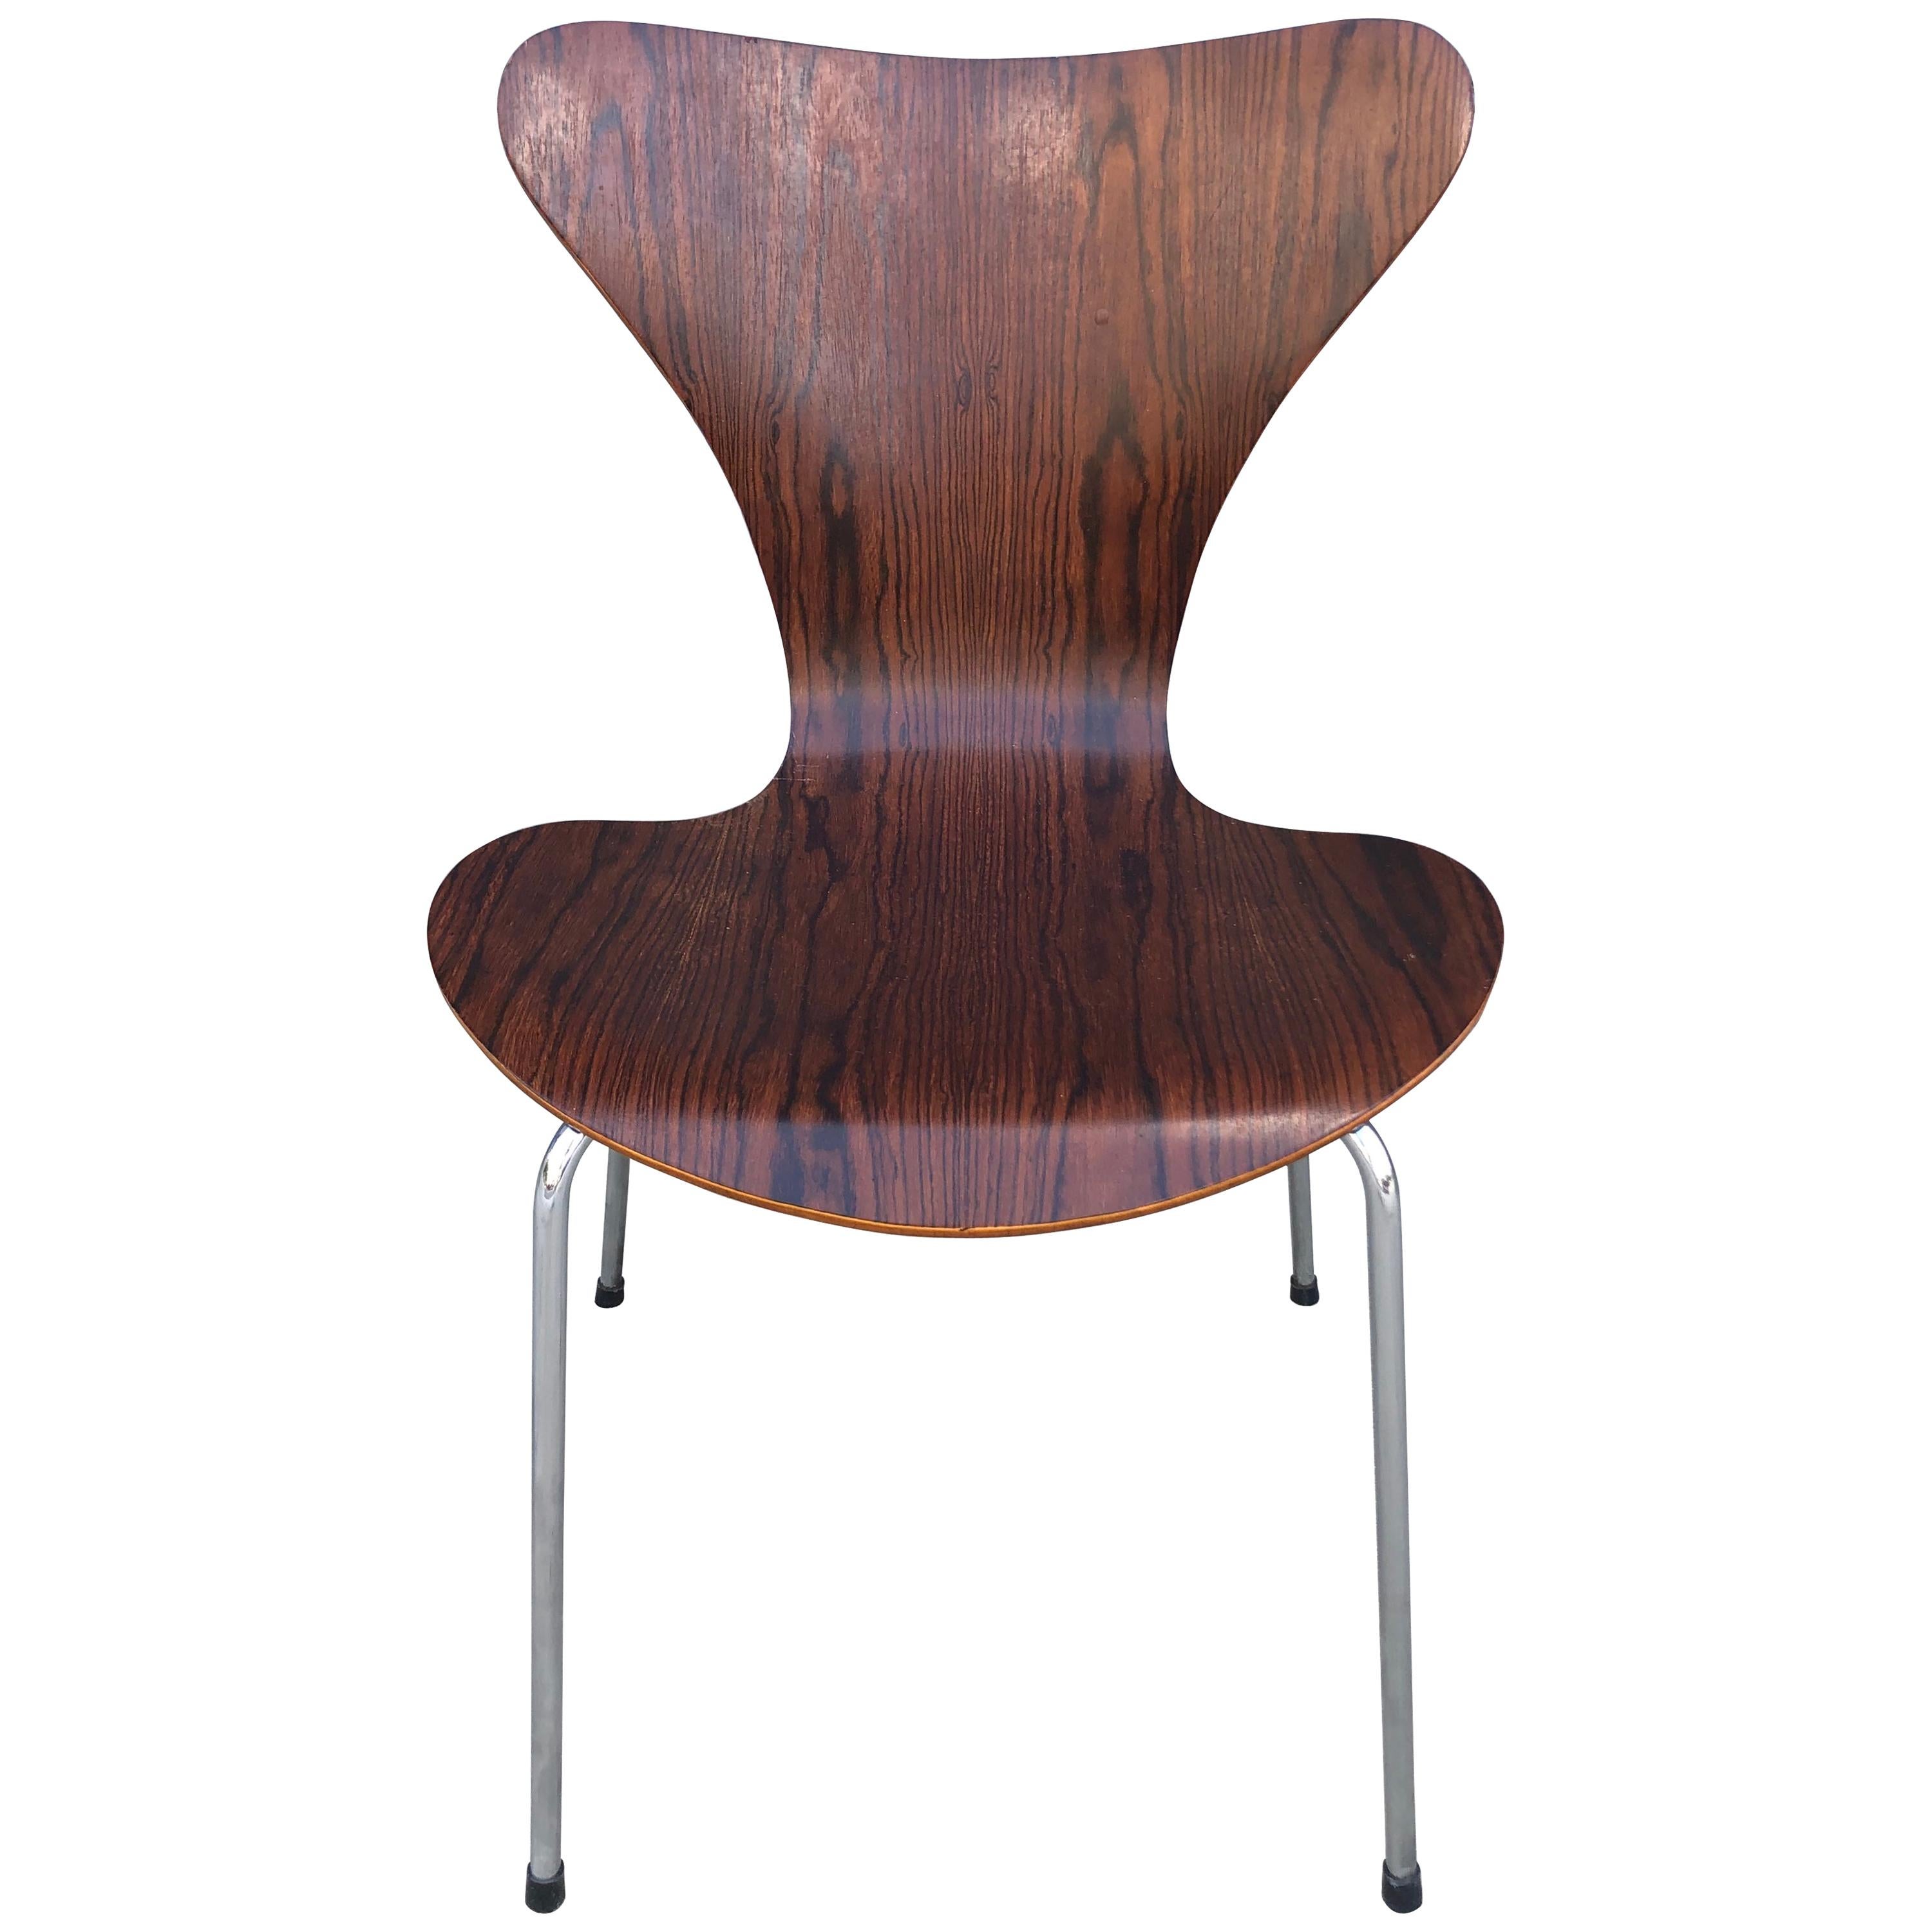 Gorgeous Arne Jacobsen Series 7 Chair